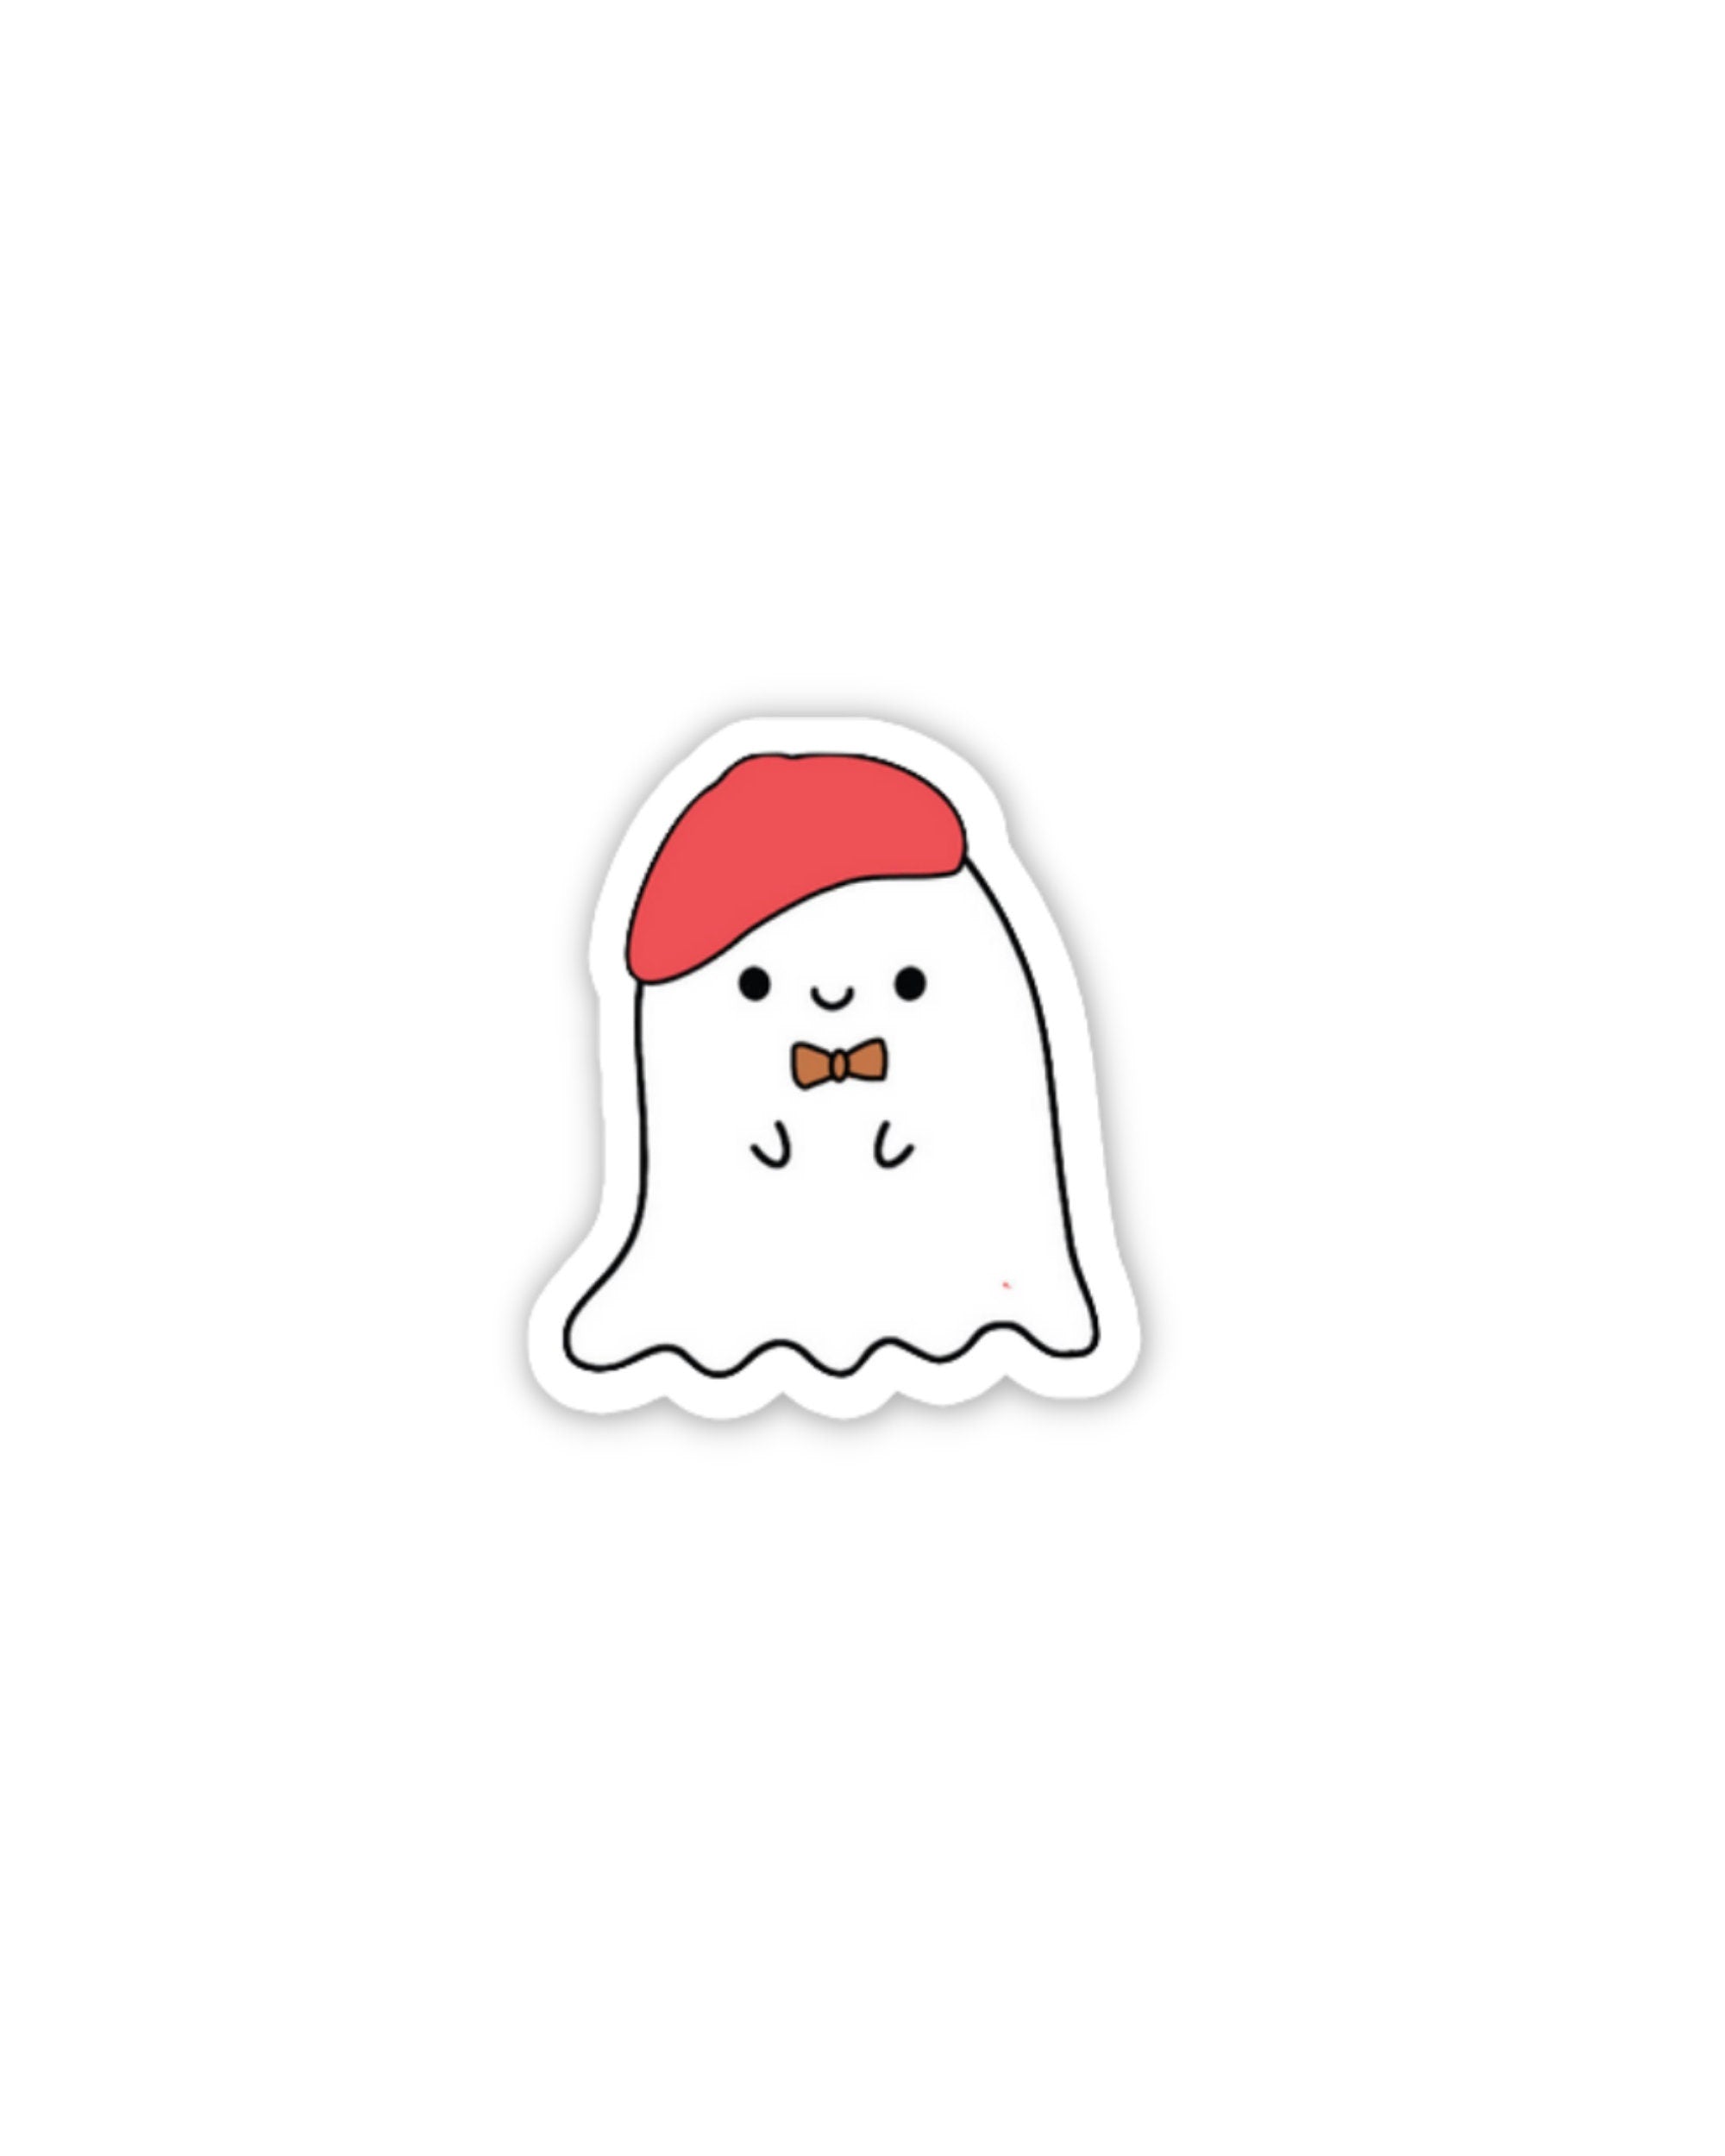 Kawaii ghosts halloween stickers